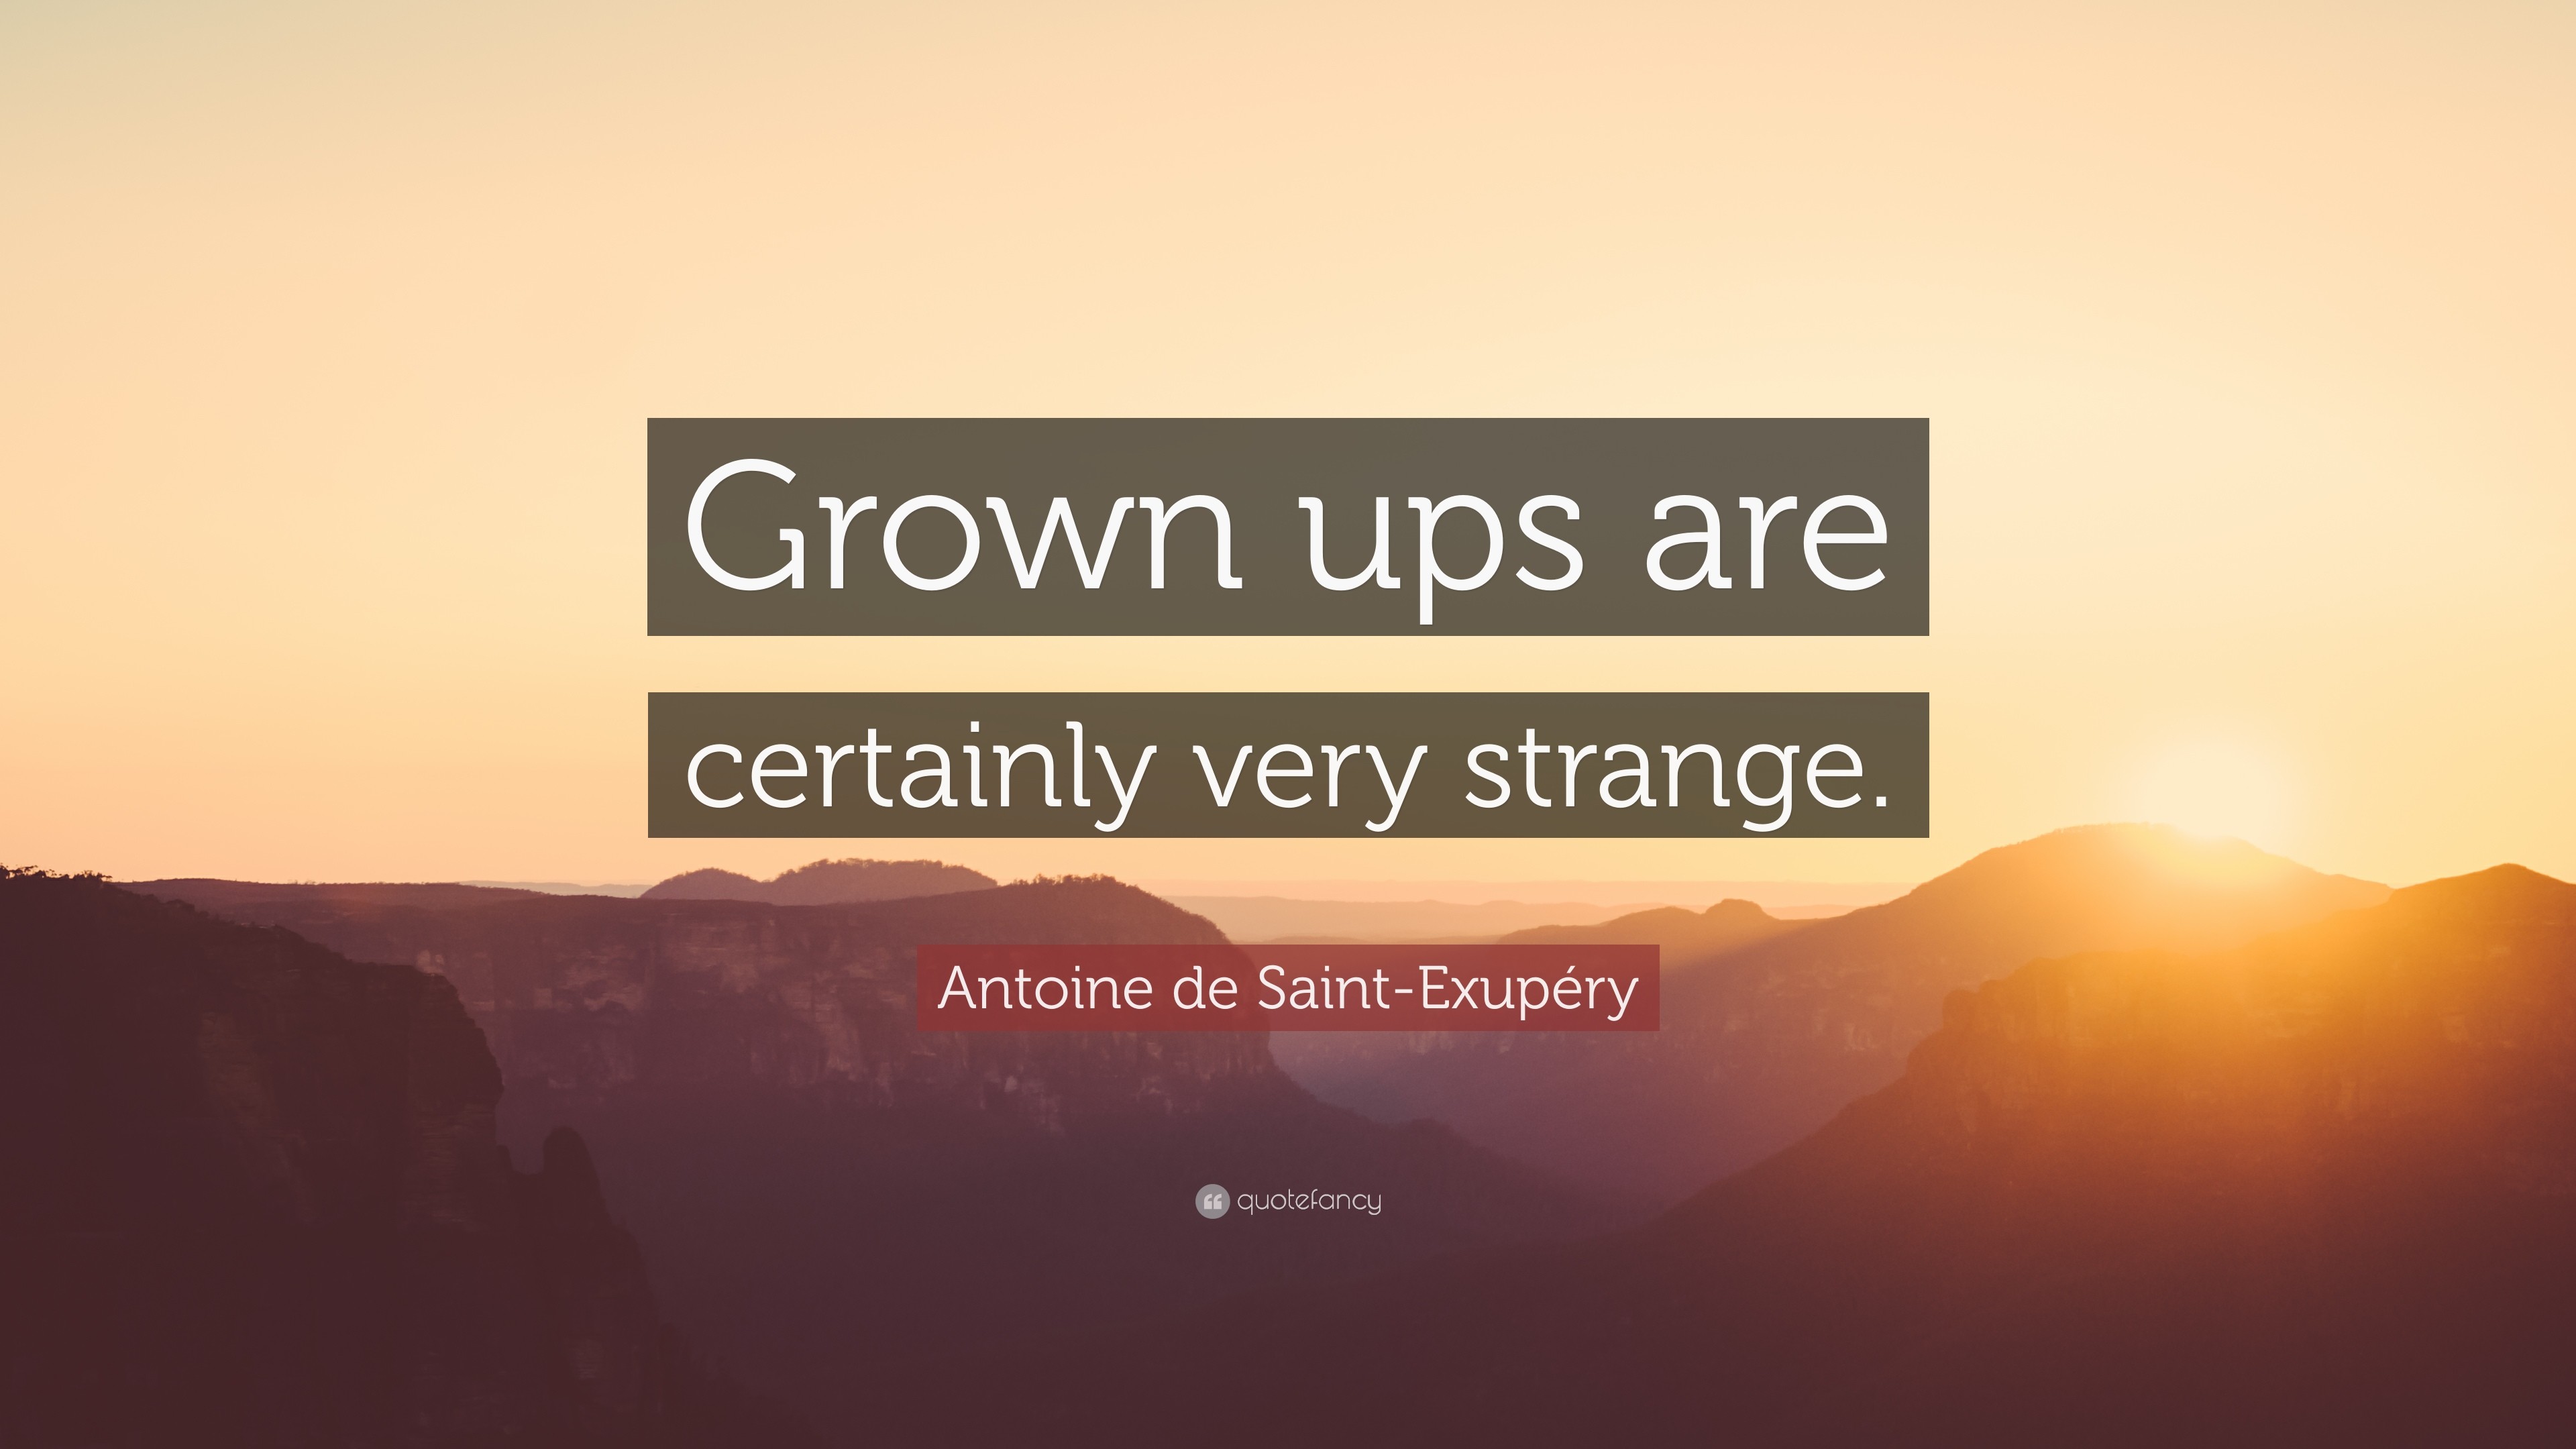 3840x2160 Antoine de Saint-ExupÃ©ry Quote: “Grown ups are certainly very strange.”